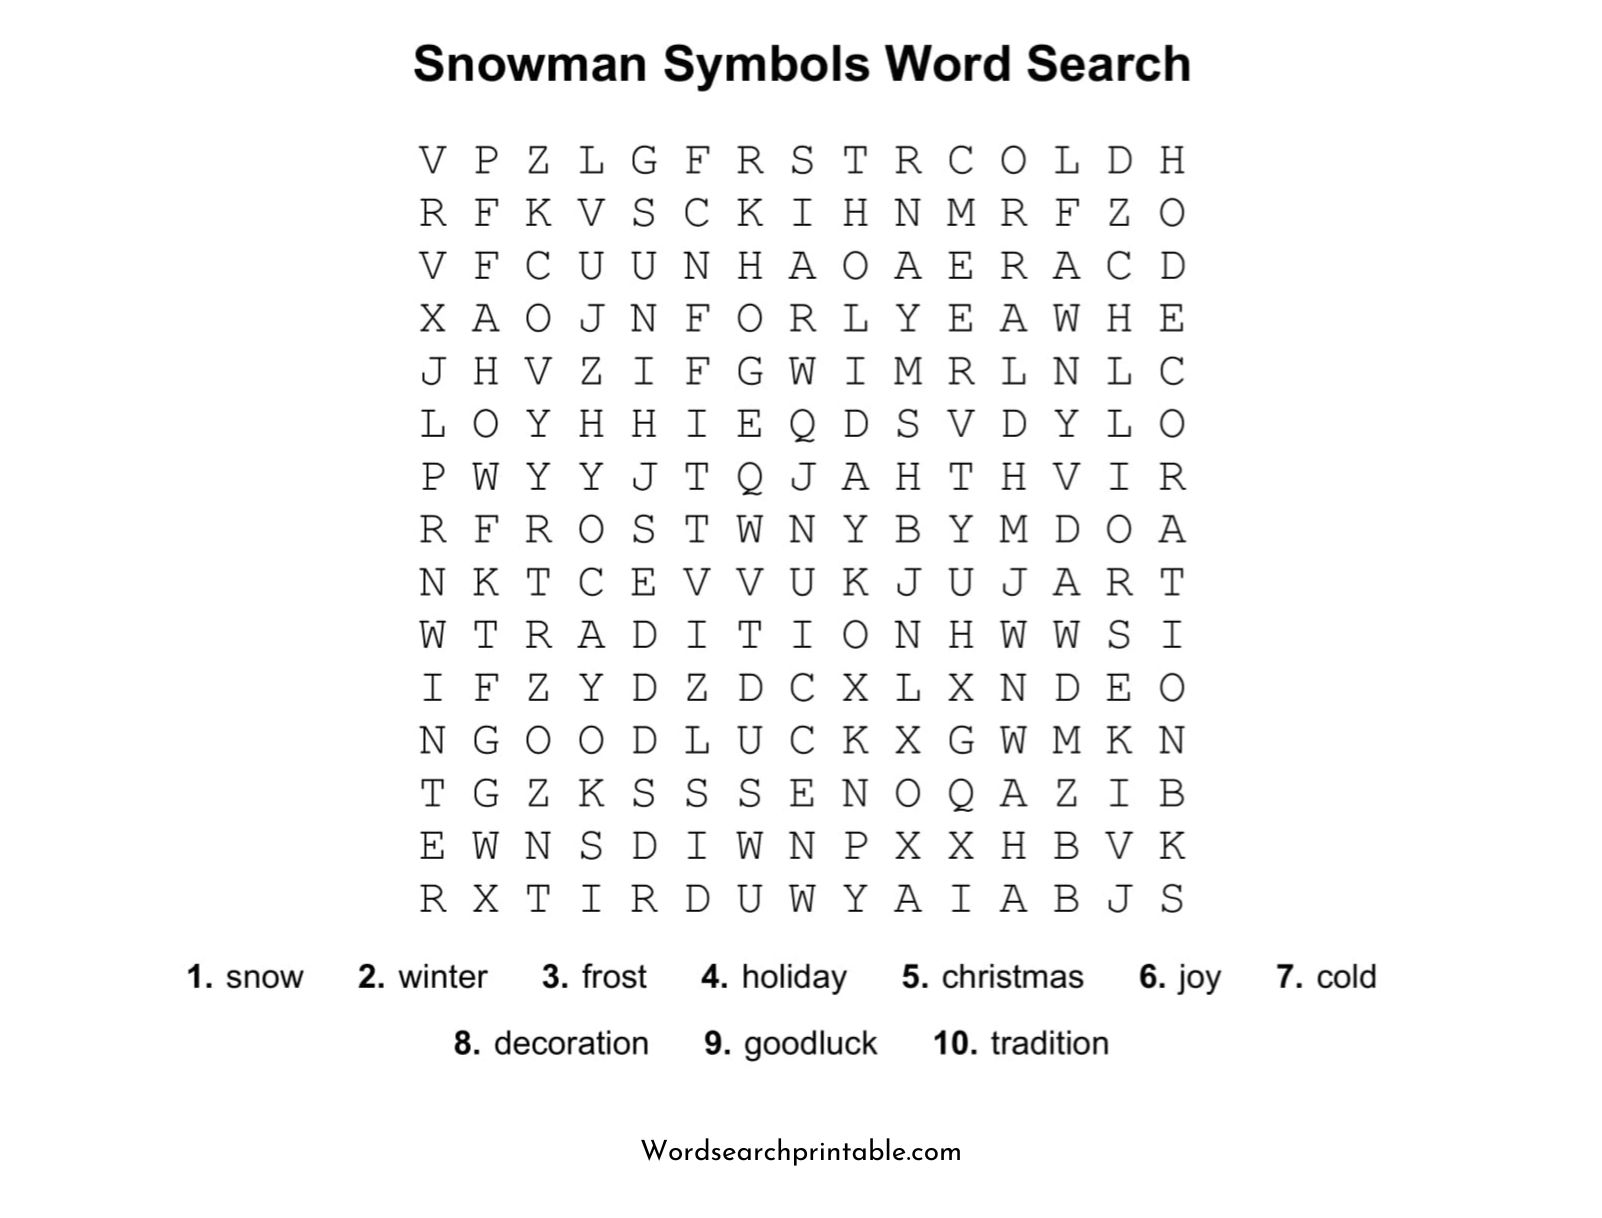 snowman-symbols-word-search-puzzle